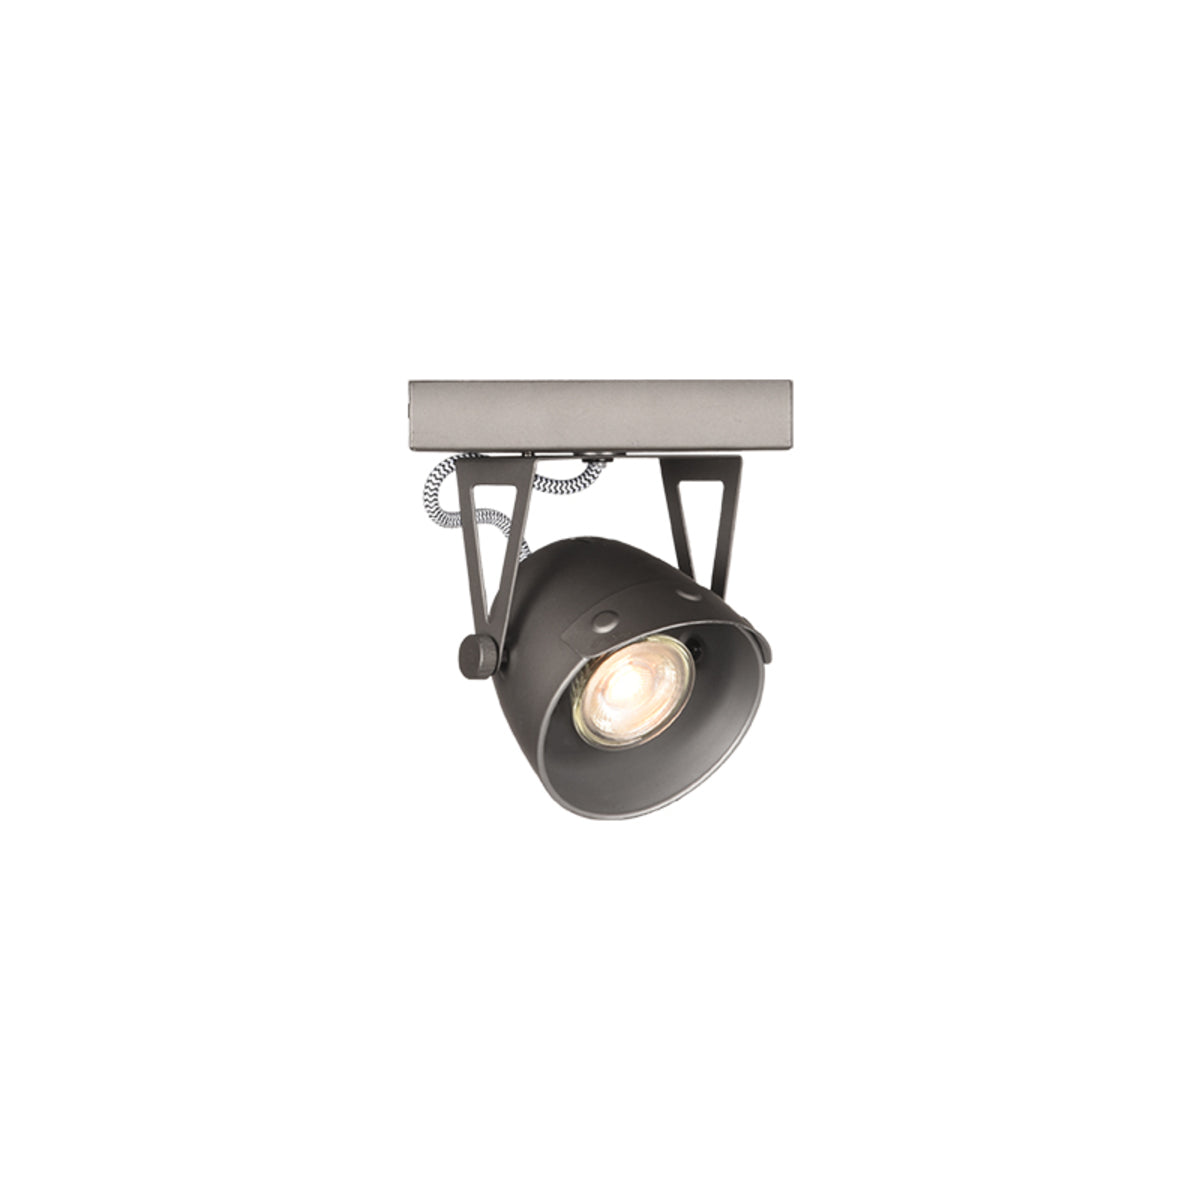 LABEL51 Spot Cap LED - Gray - Metal - 1 Light